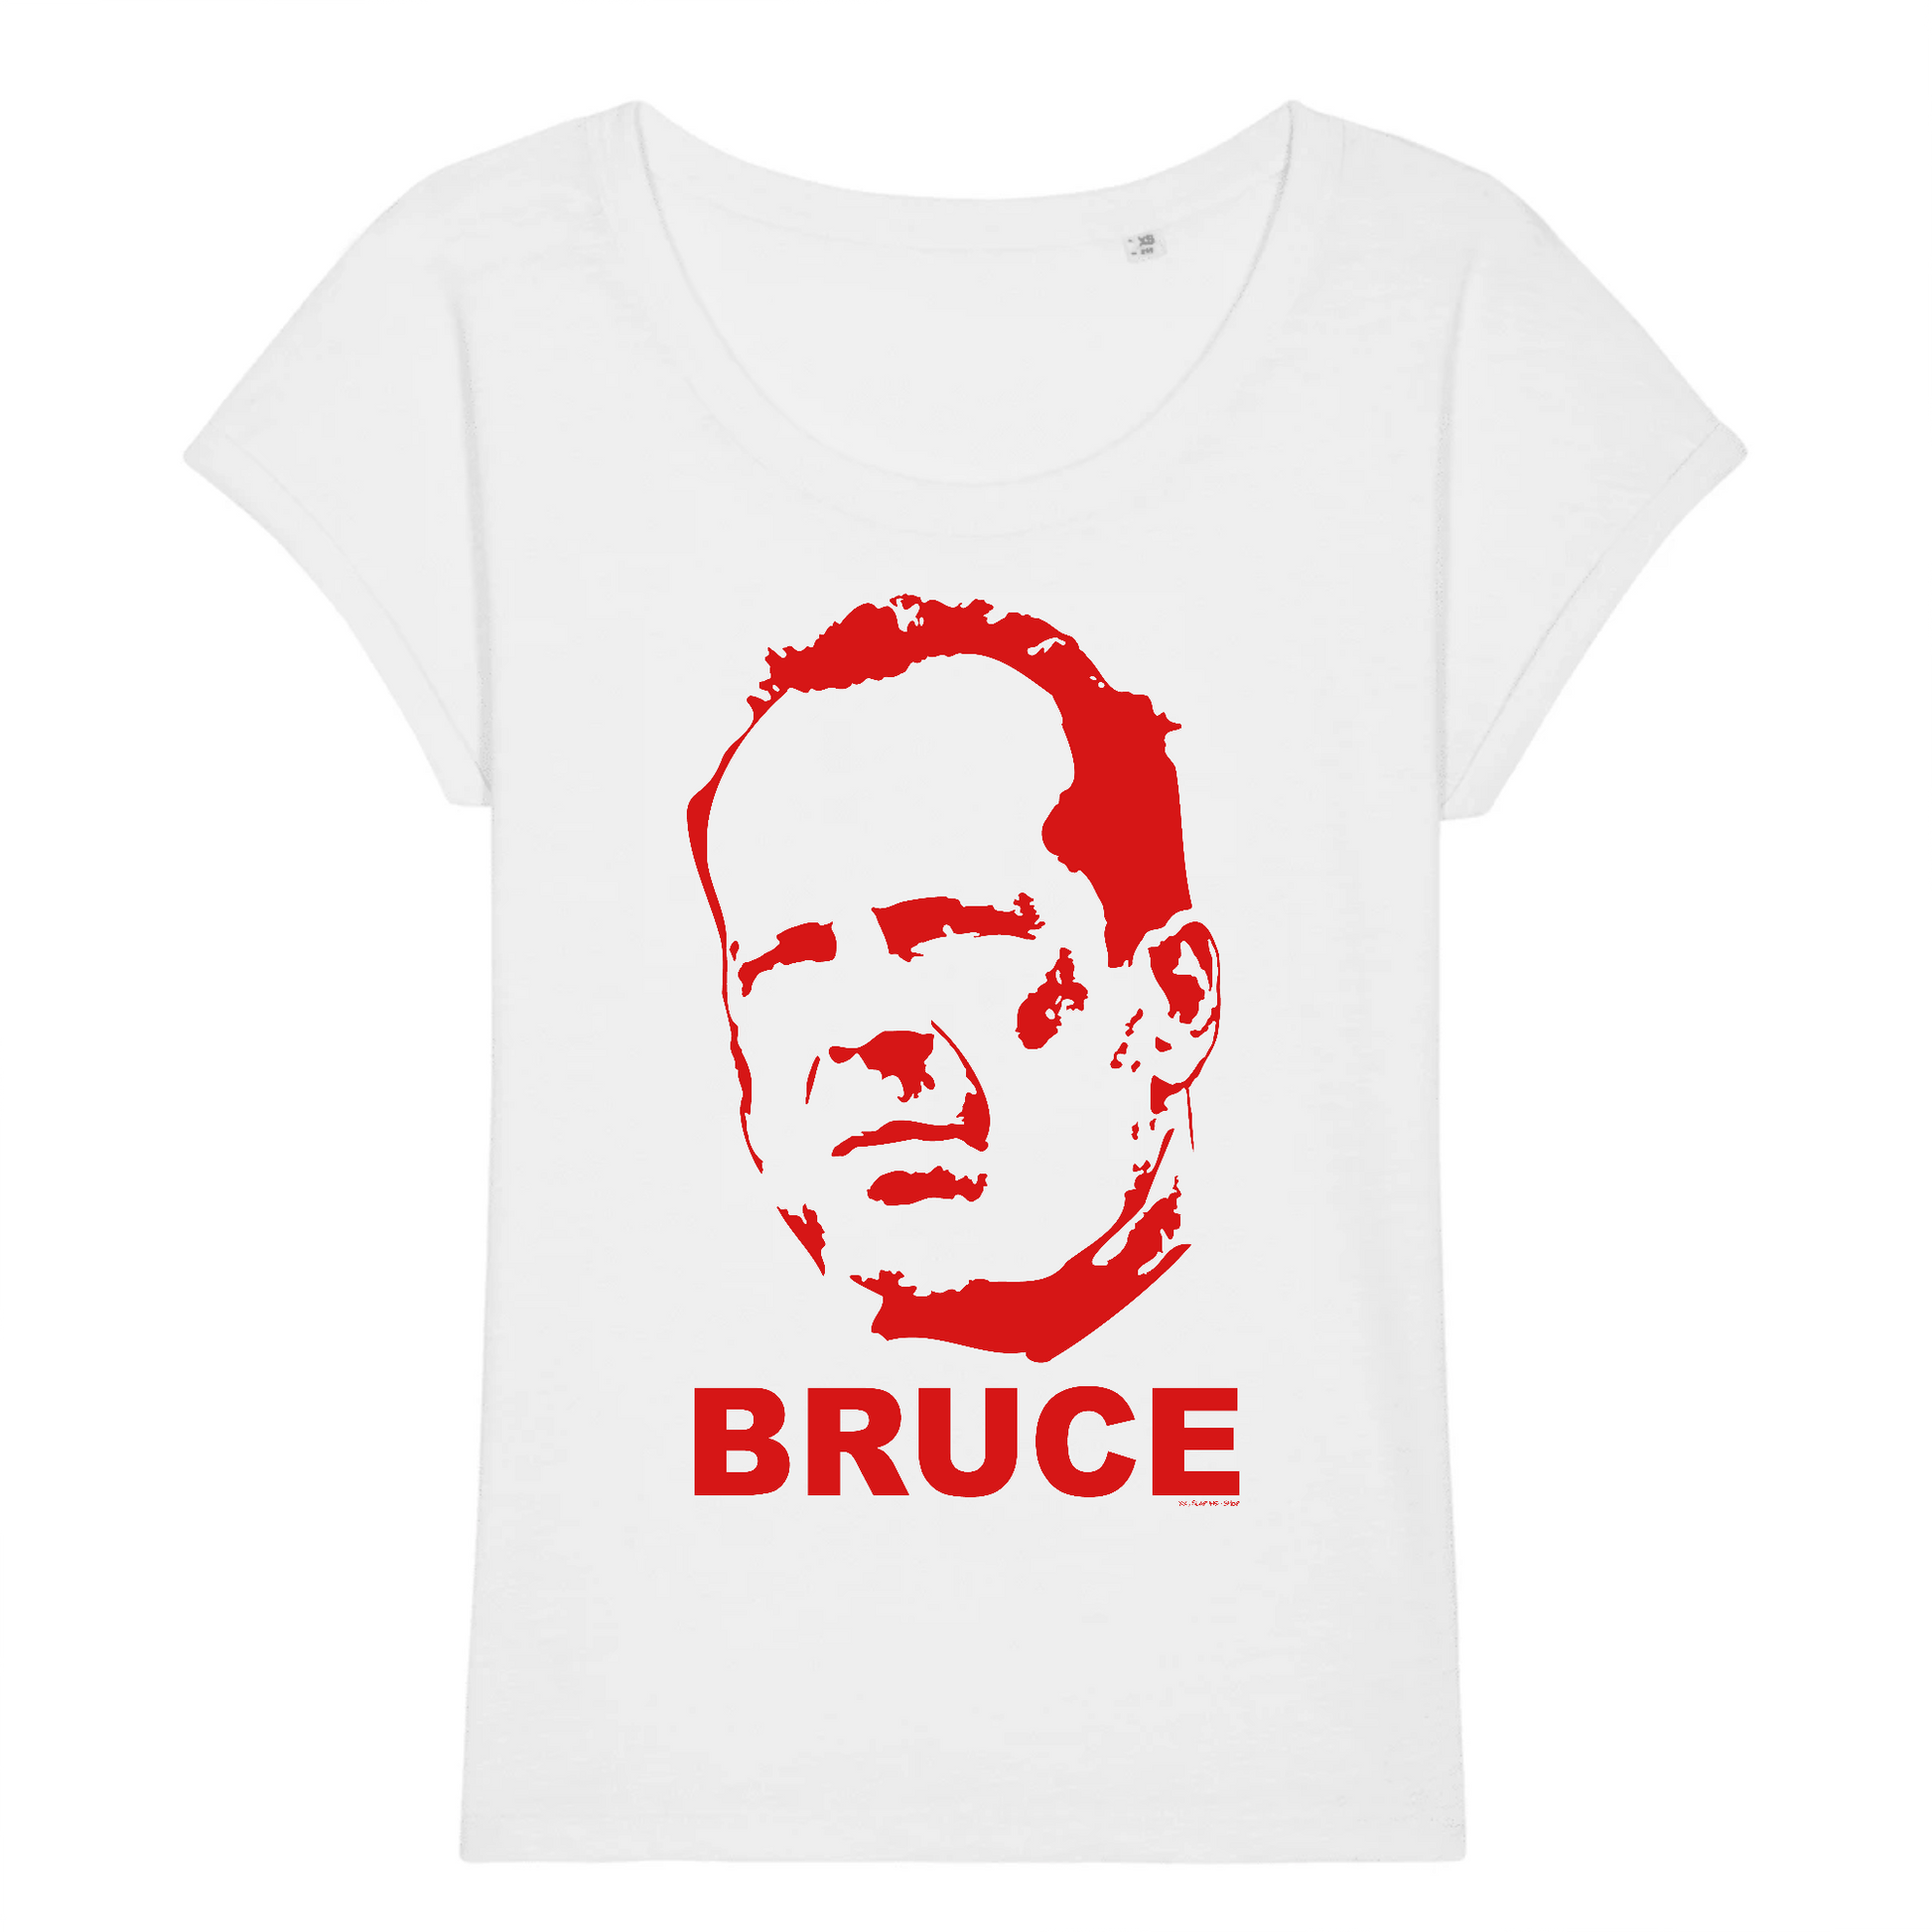 Bruce willis organic shirt